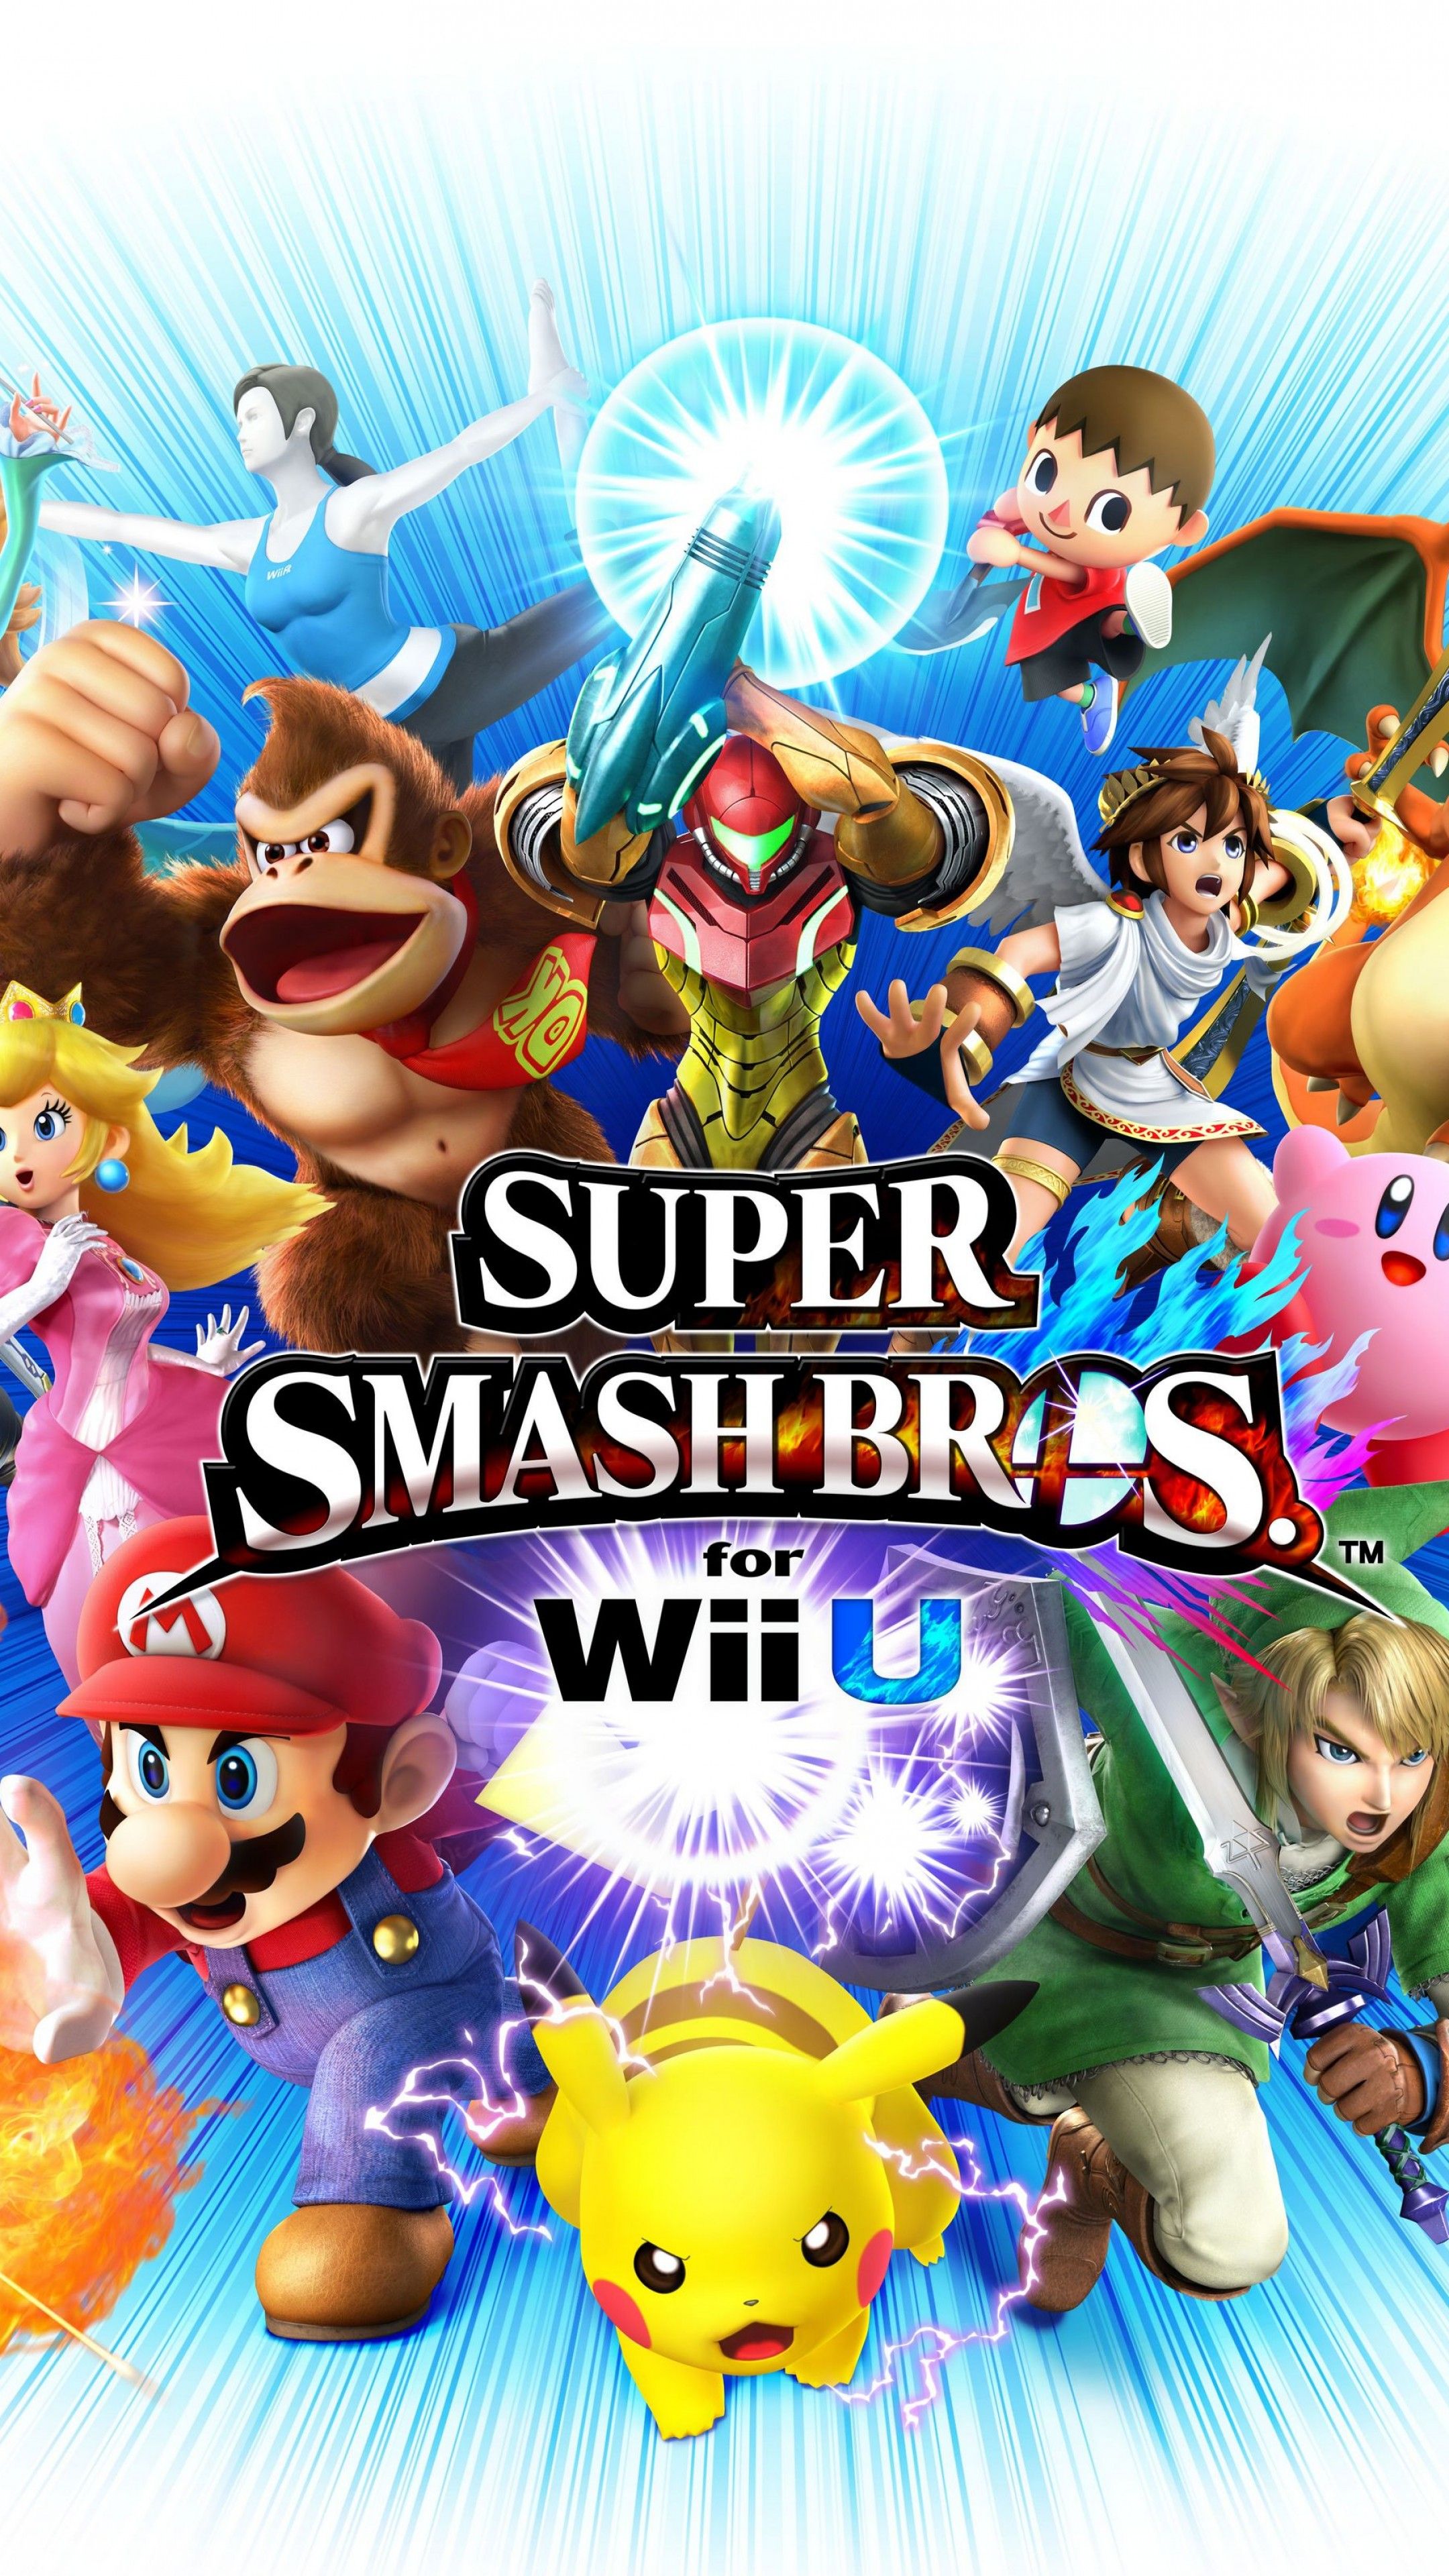 Wallpaper Super Smash Bros, Nintendo, 3DS, Wii U, Brawl, 3D, gameplay, review, screenshot, Games